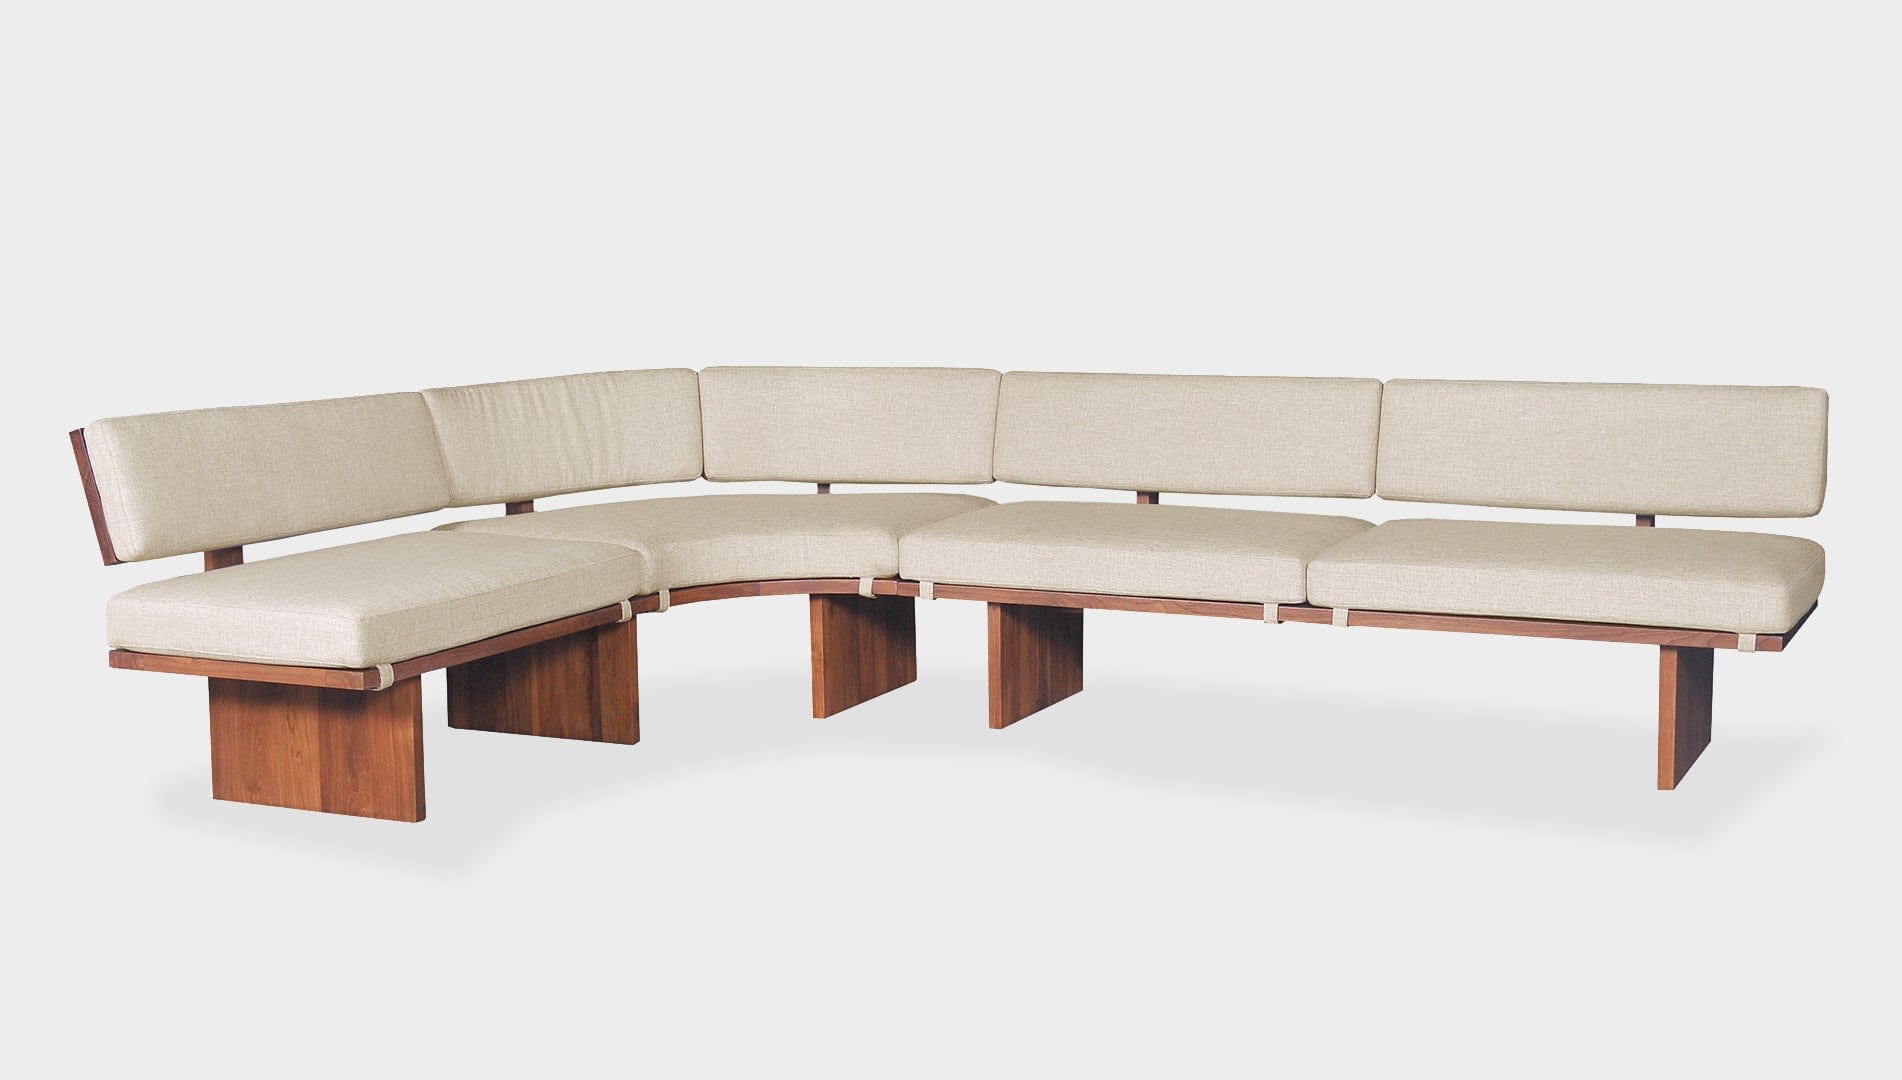 reddie-raw sofa 281W x 191D x 72 (42H seat) *cm / Fabric~Davano Paper Bank / Solid Reclaimed Wood Teak~Natural Bob Lounge Modular